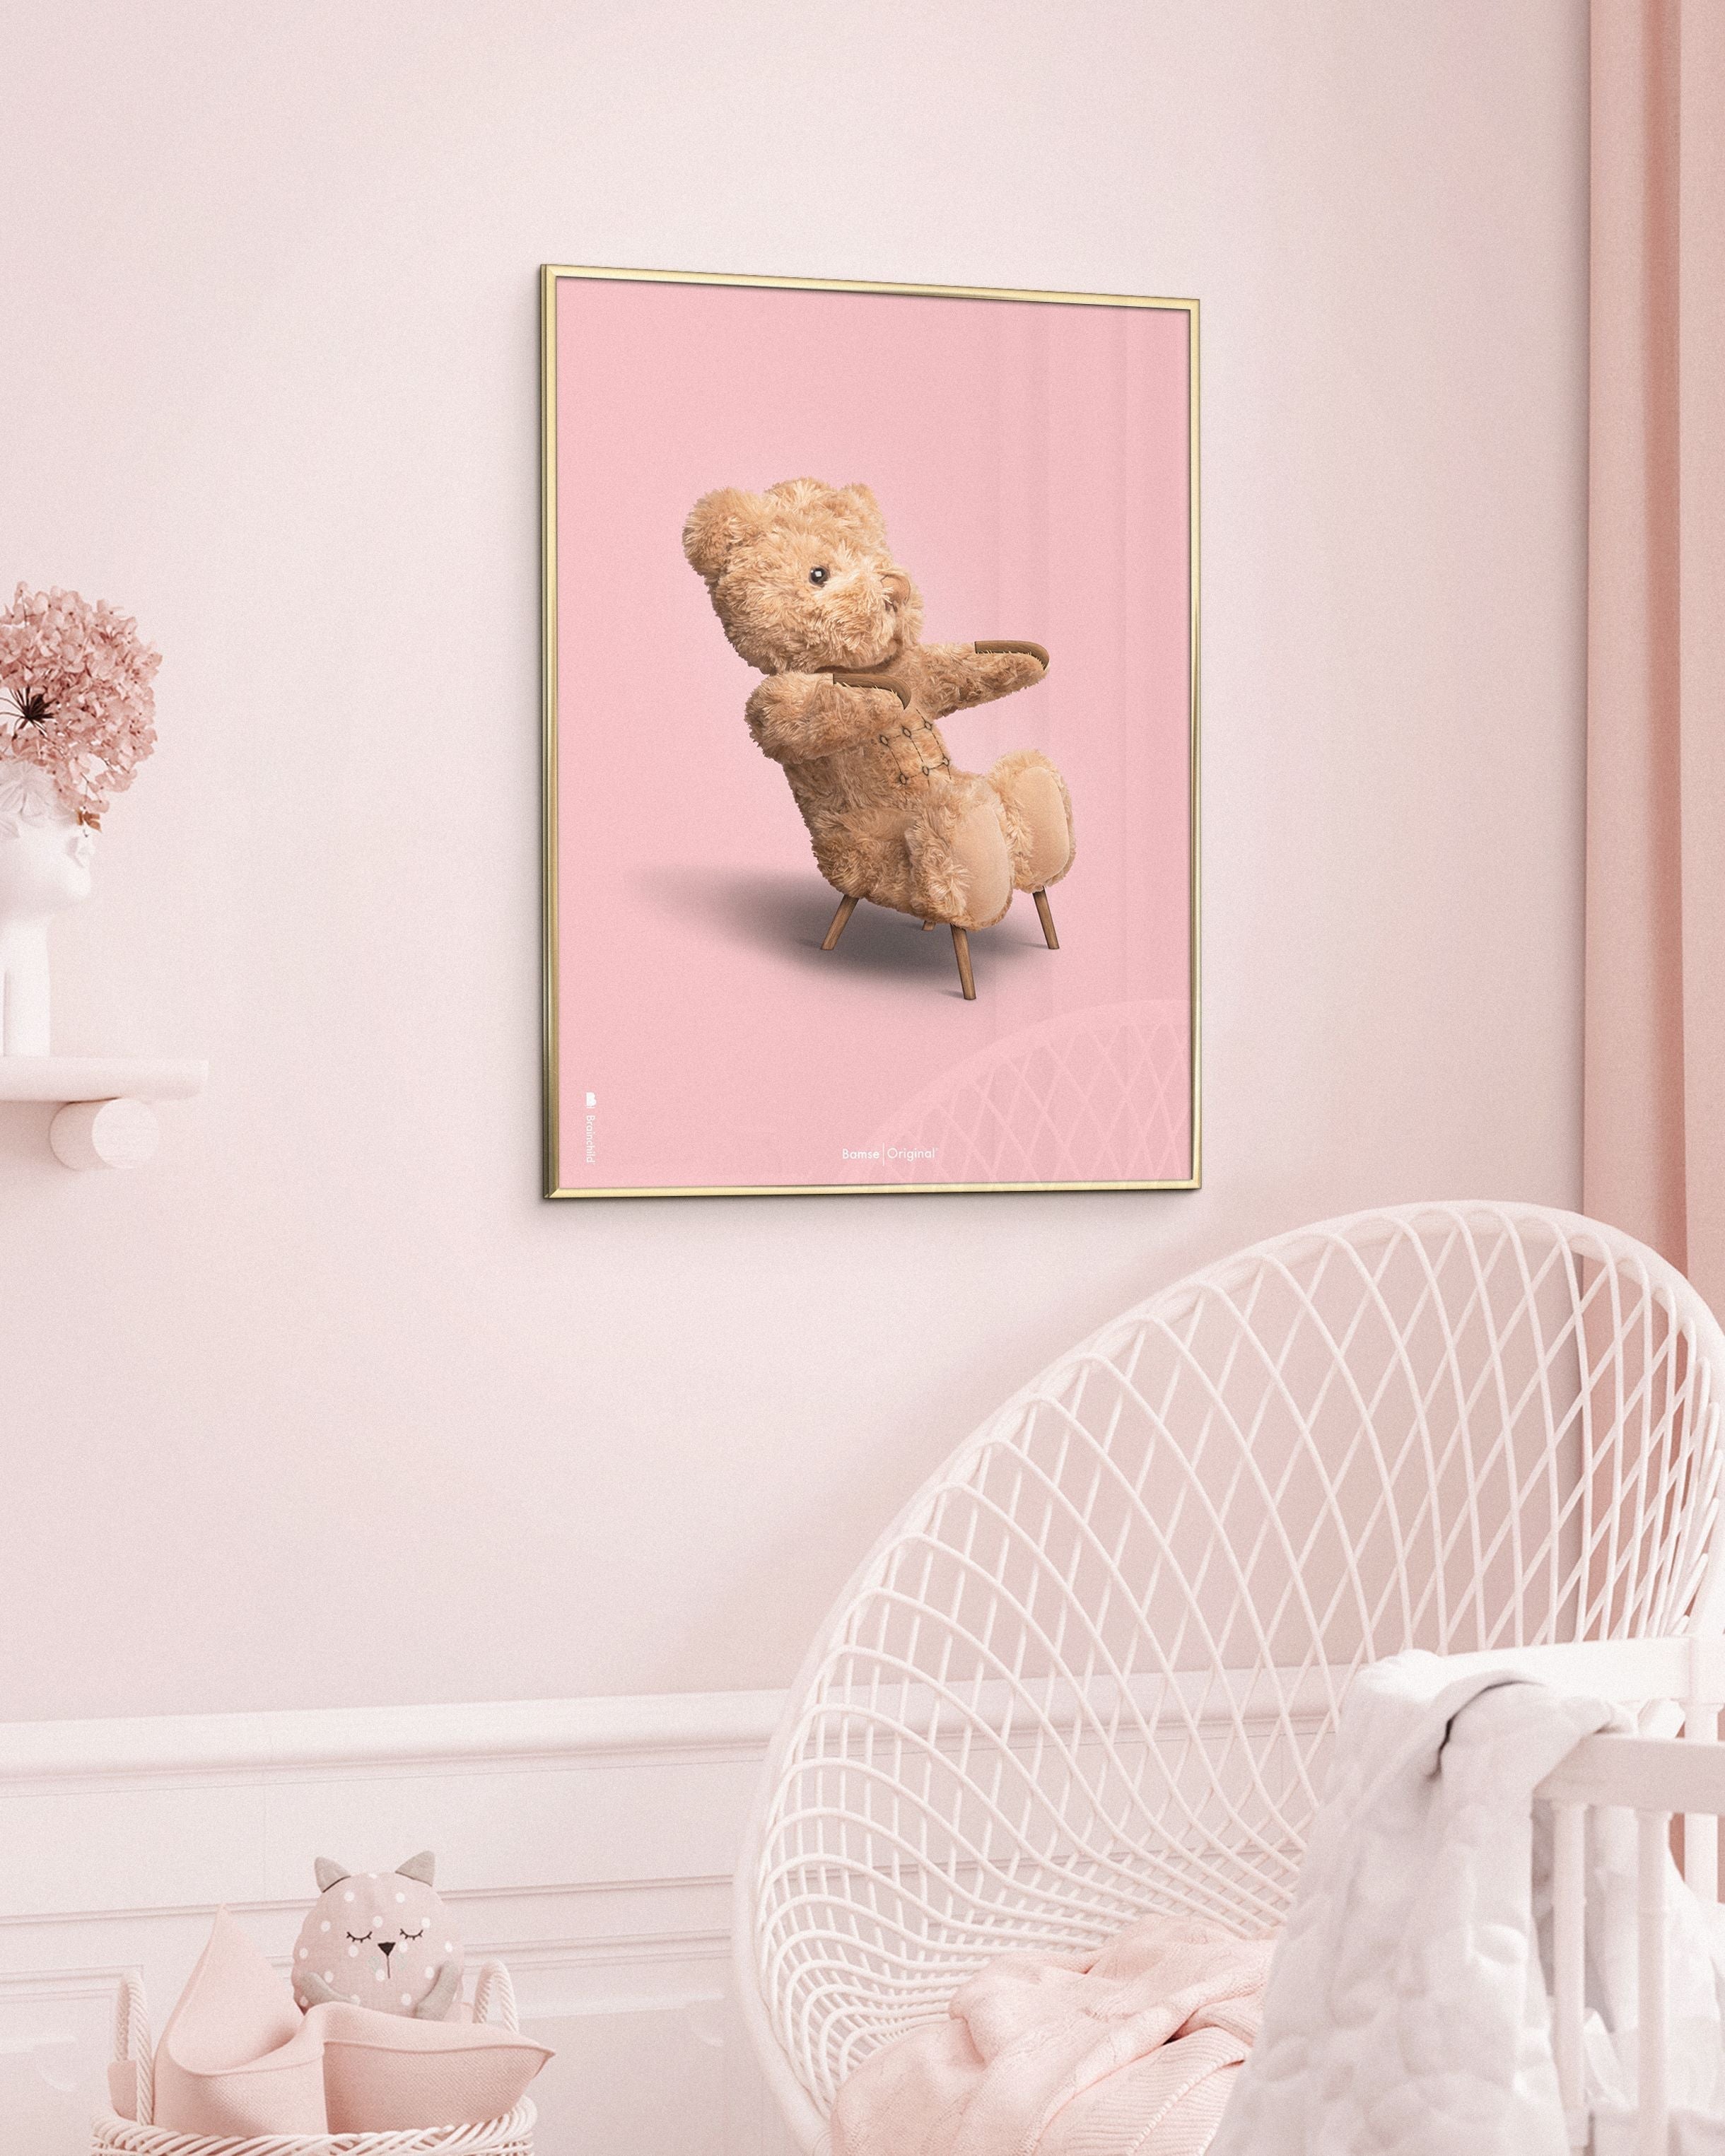 Brainchild Nallebjörn klassisk affischram i mörk träram 70x100 cm, rosa bakgrund